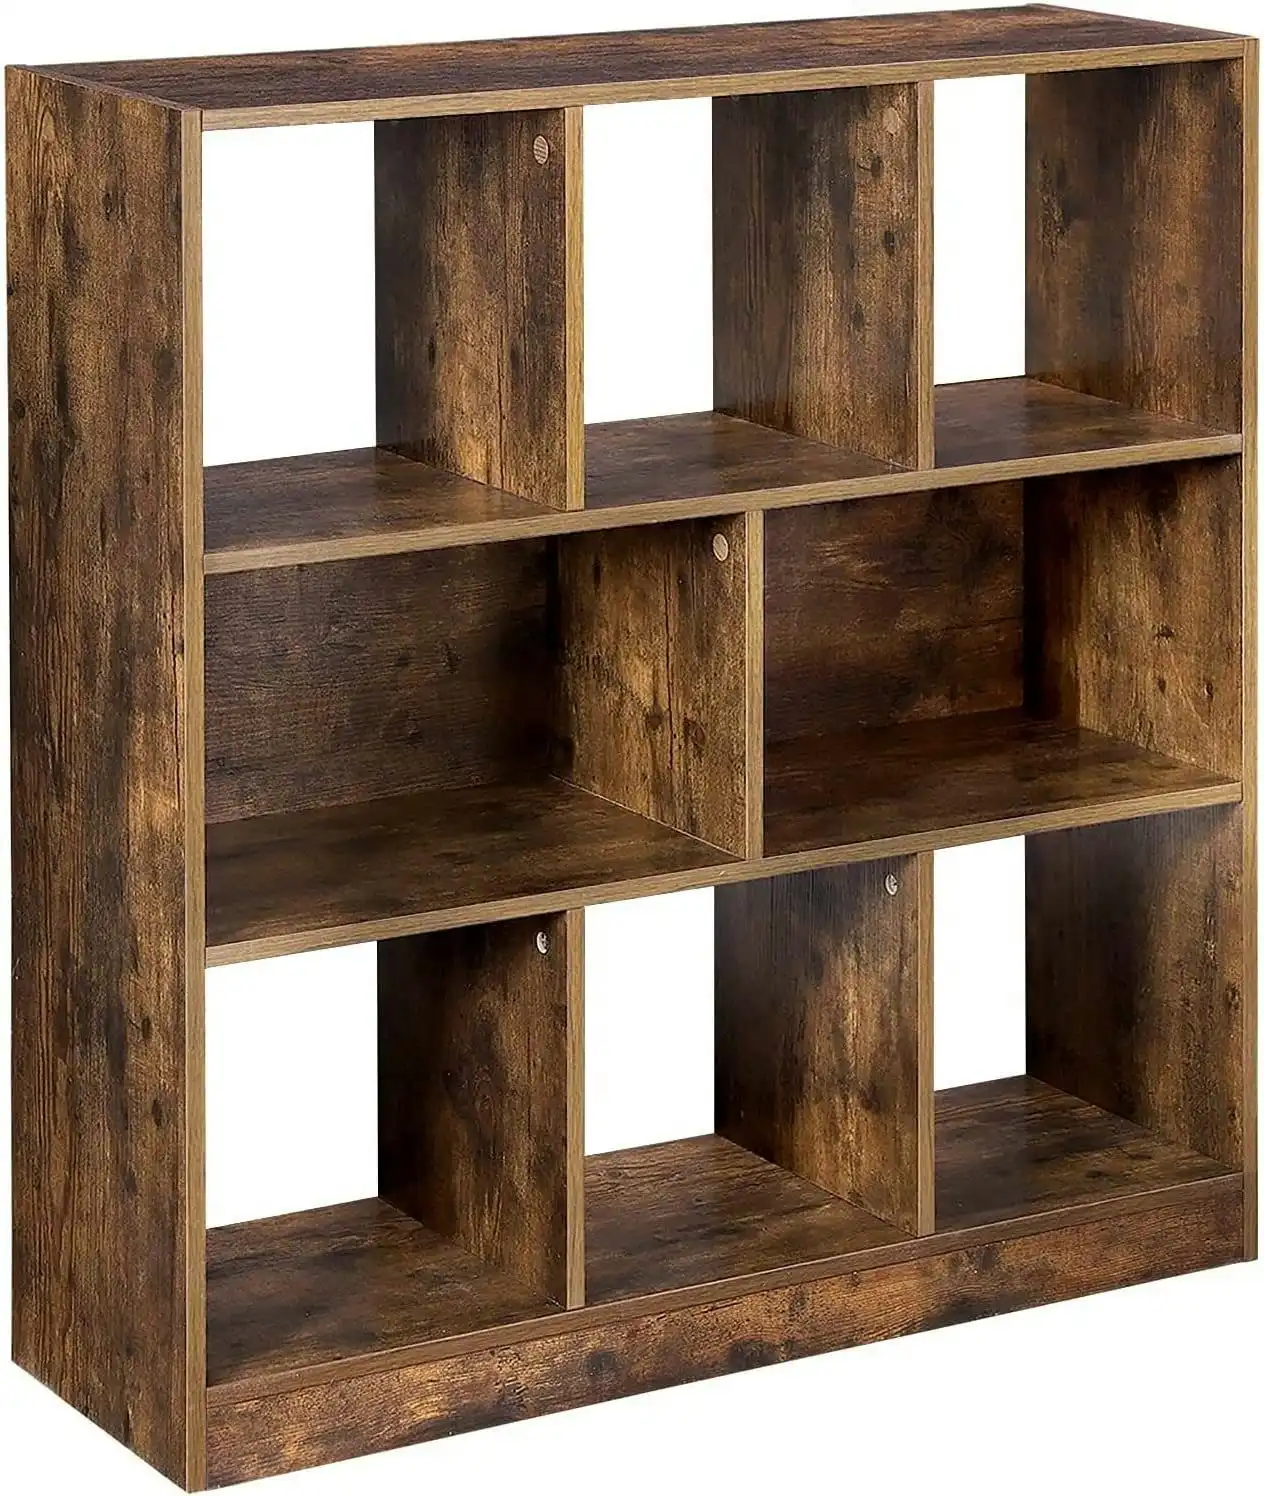 Rustic Brown Freestanding Open Shelf Bookcase